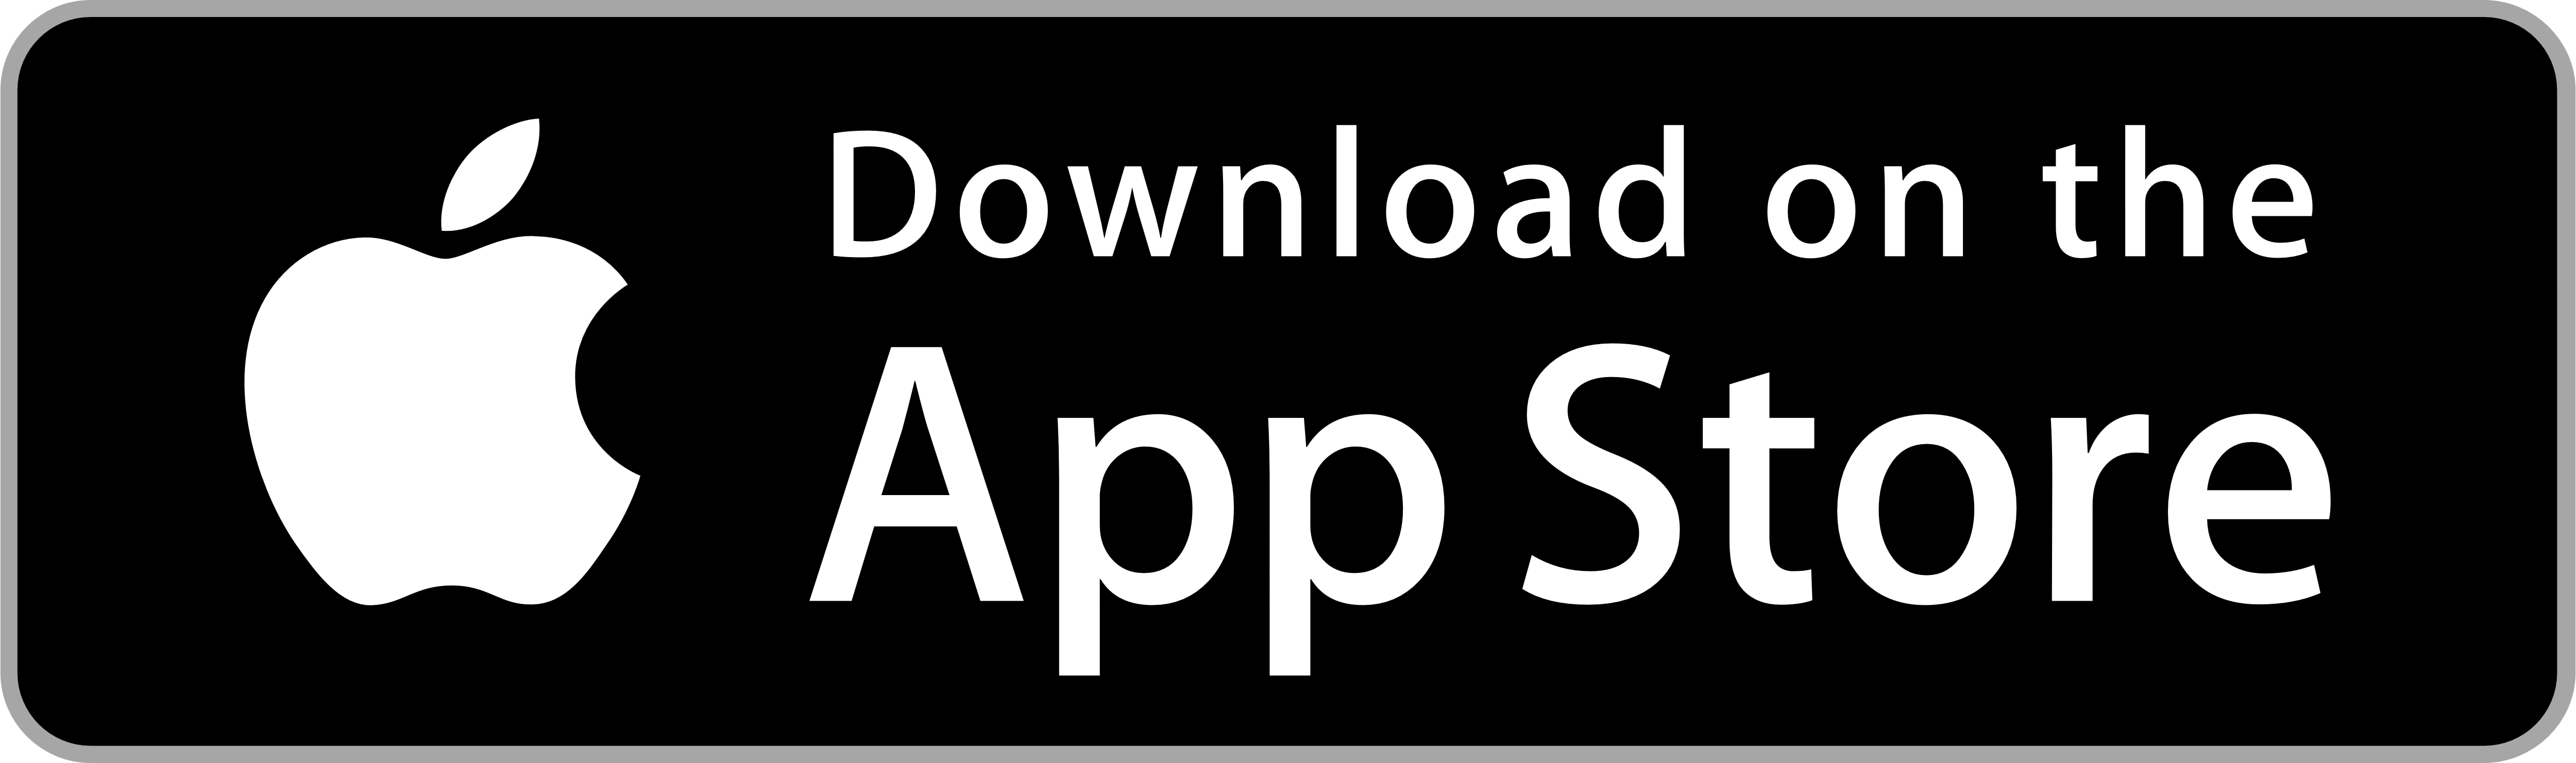 App store download ace rust